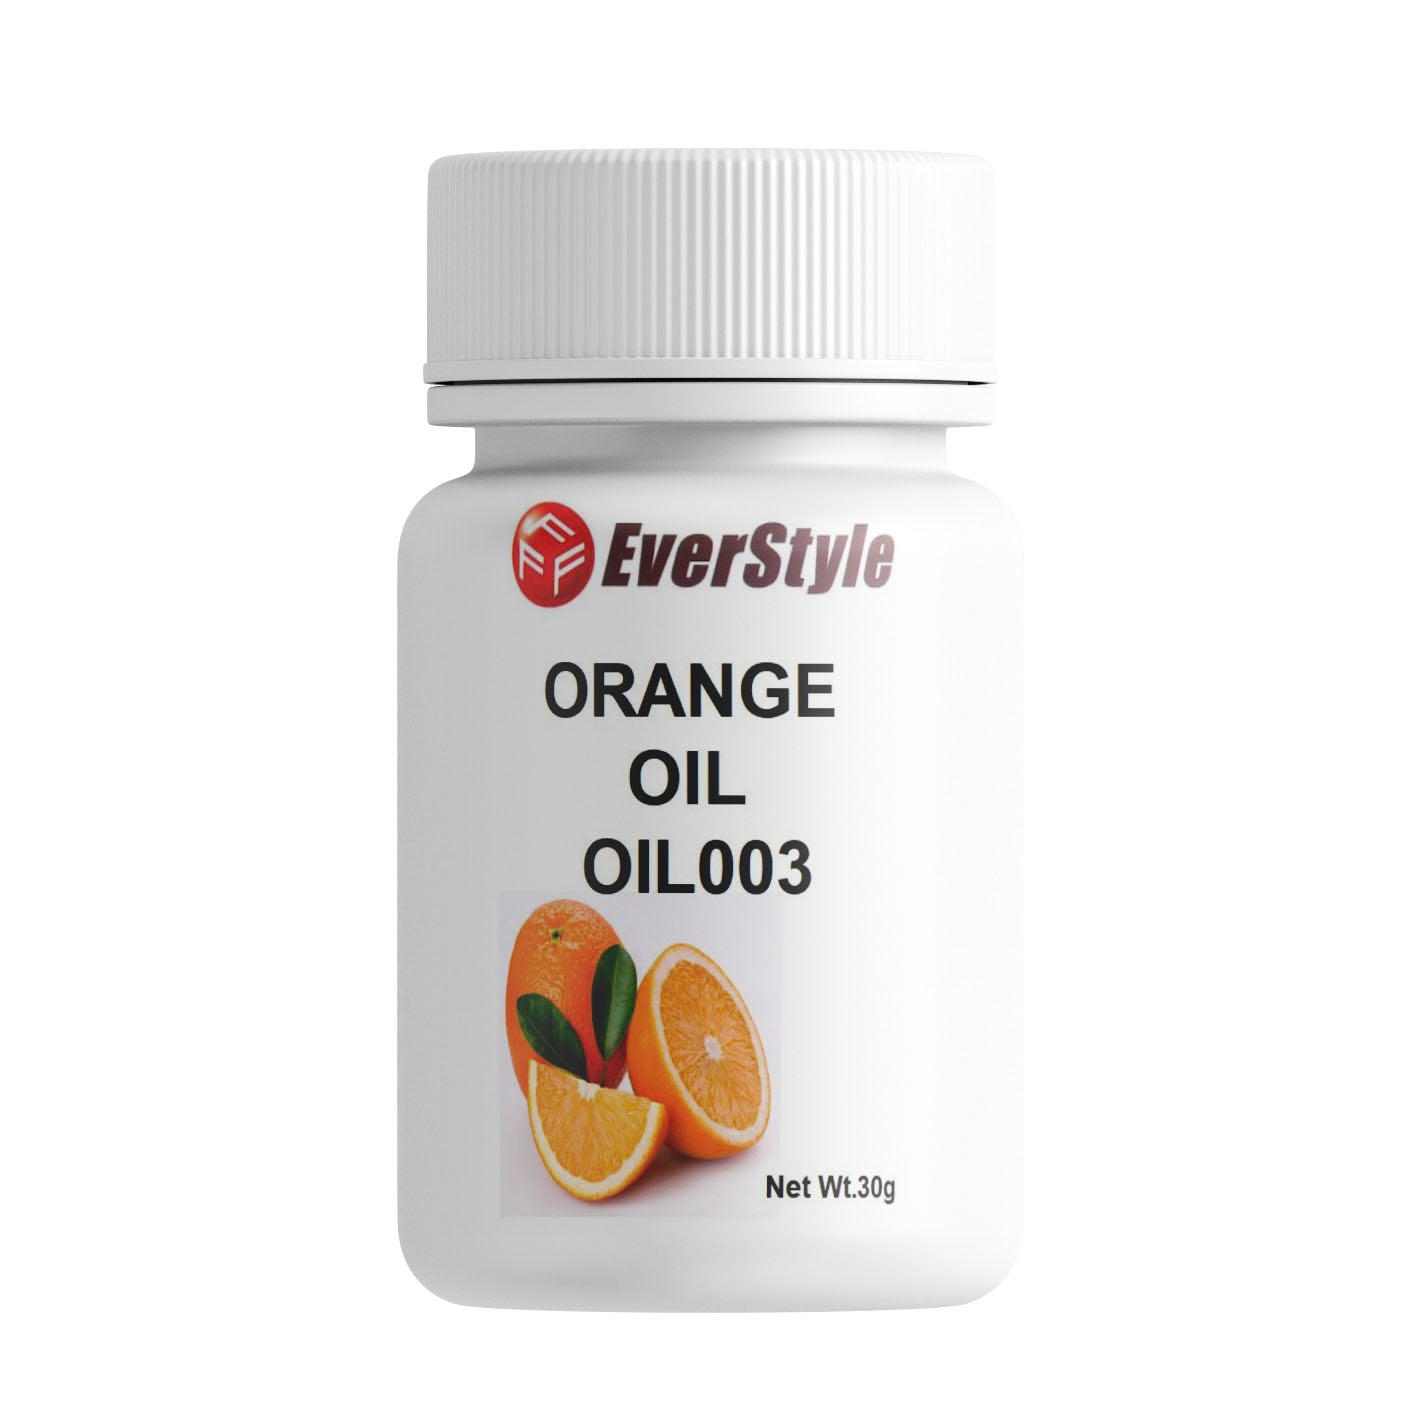 Everstyle Orange Oil 30g (OIL003)